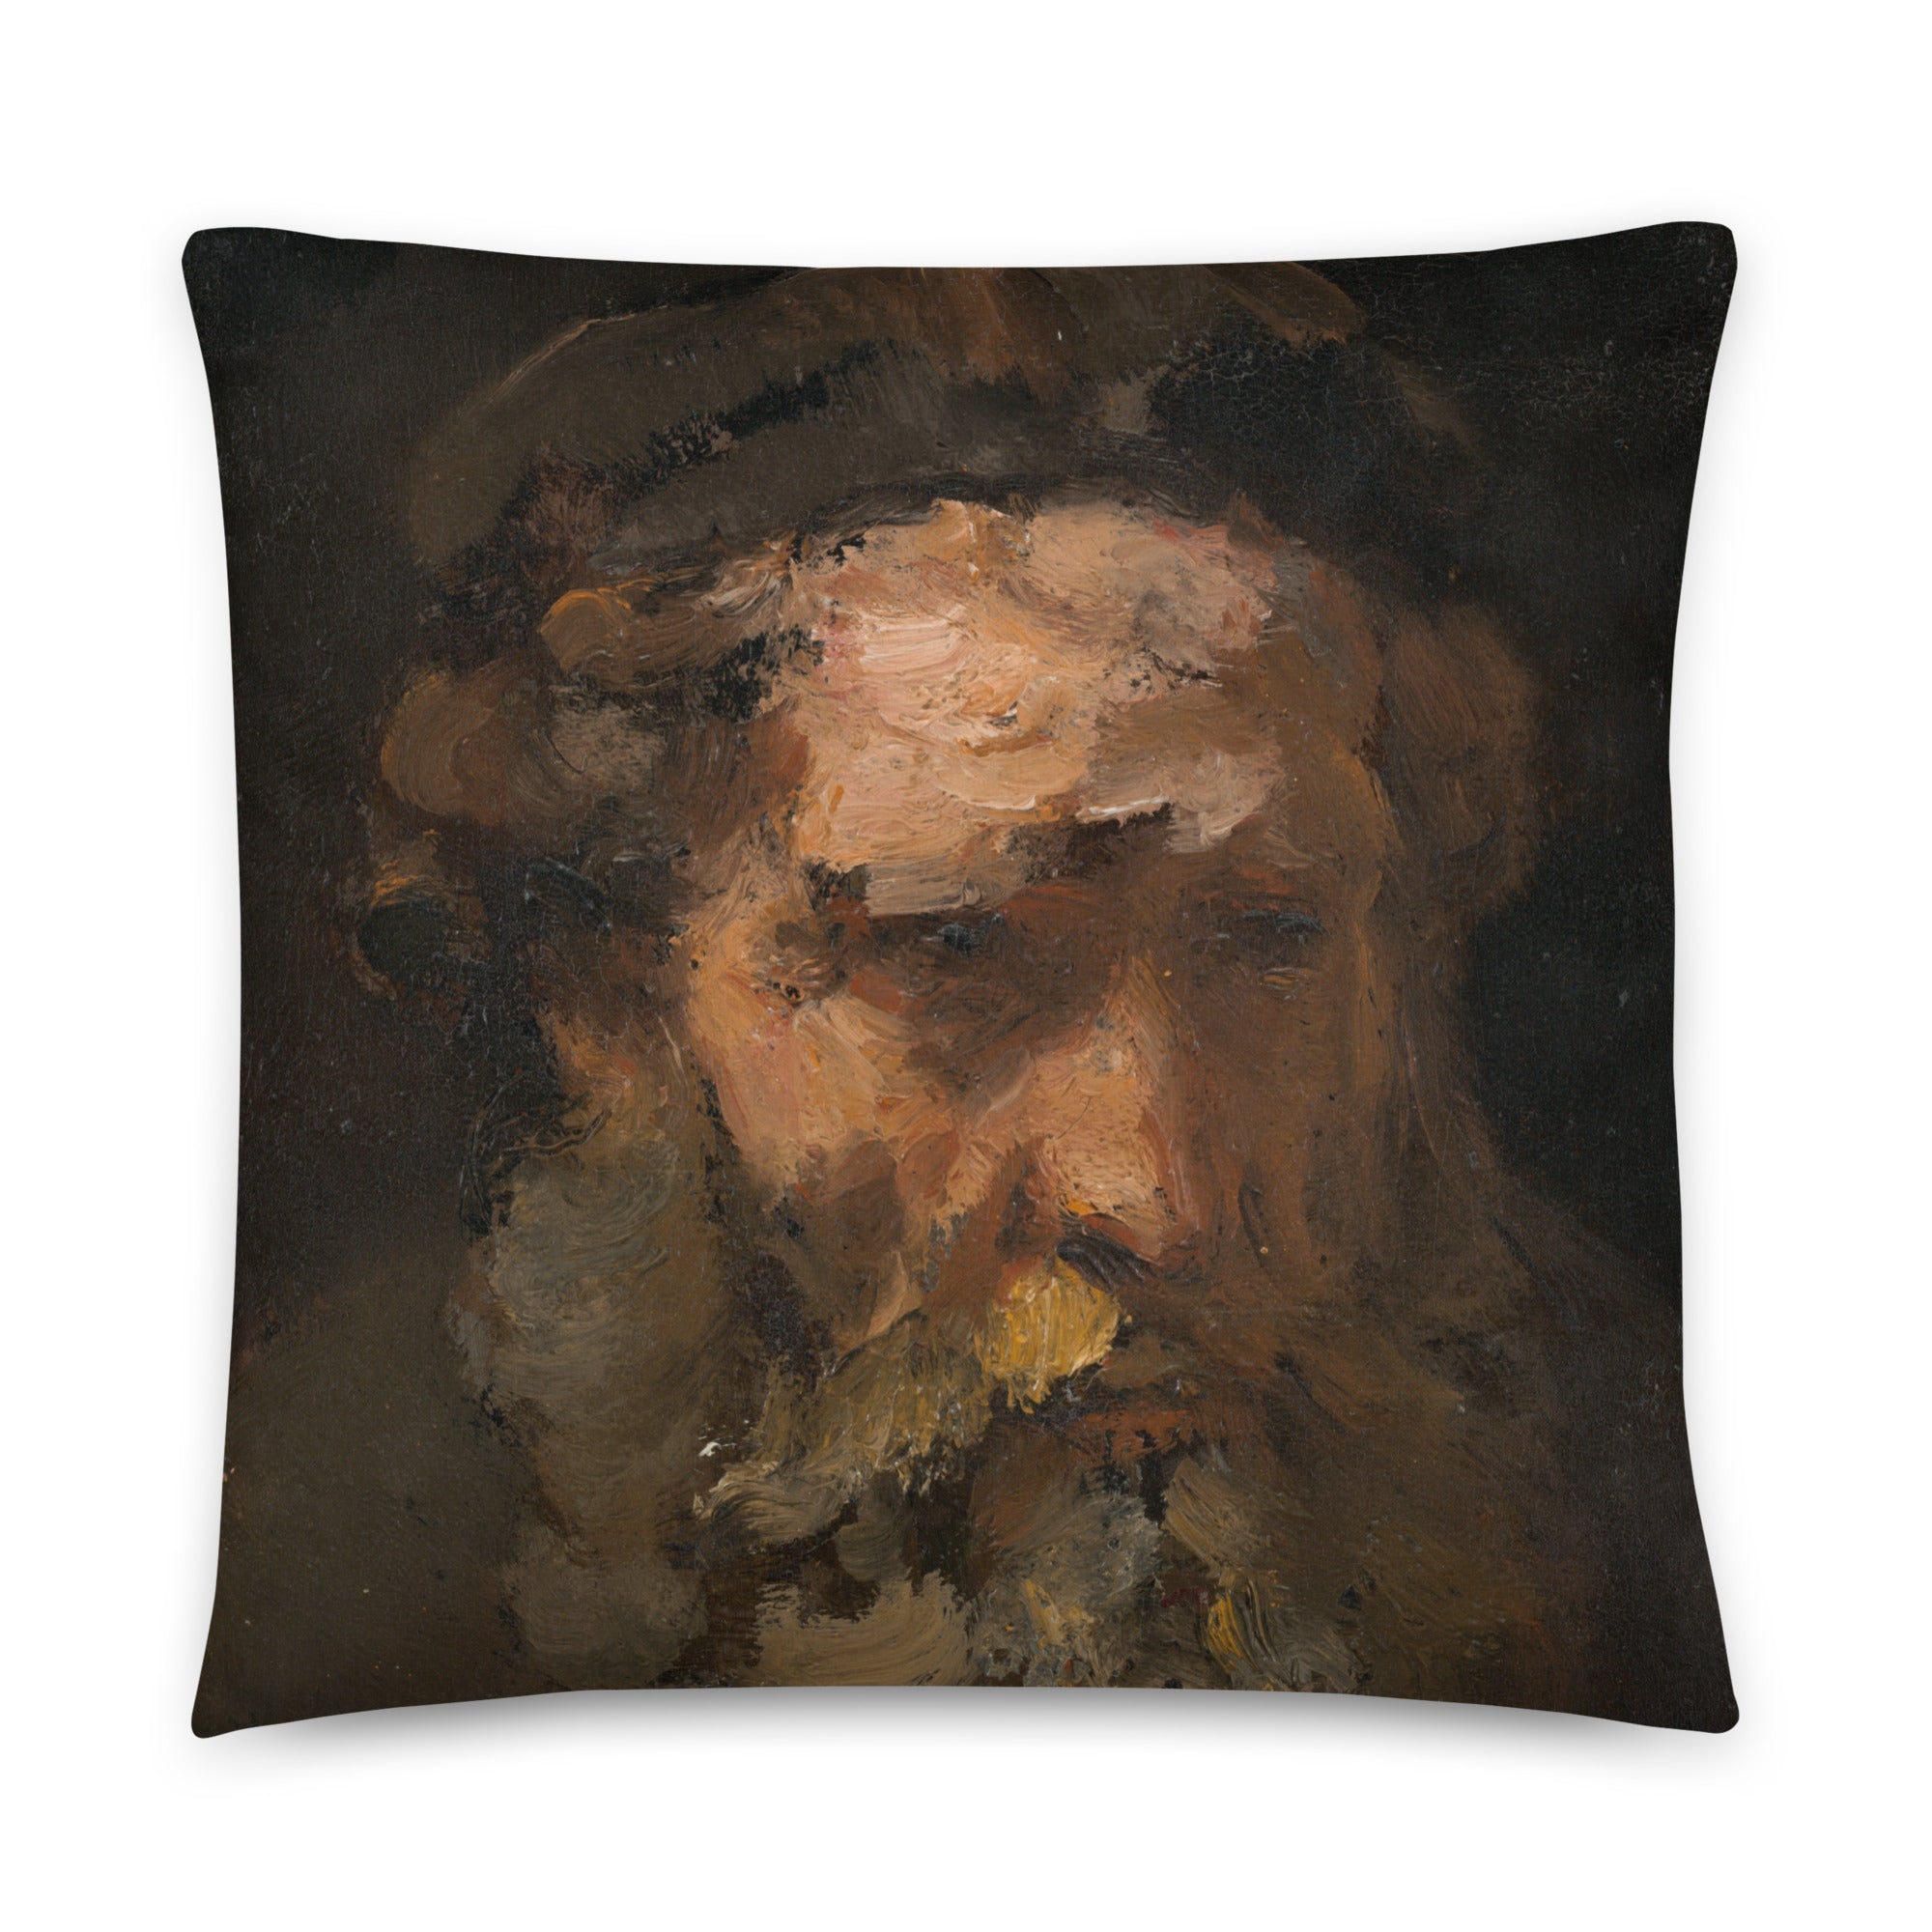 Painted Man Pillow